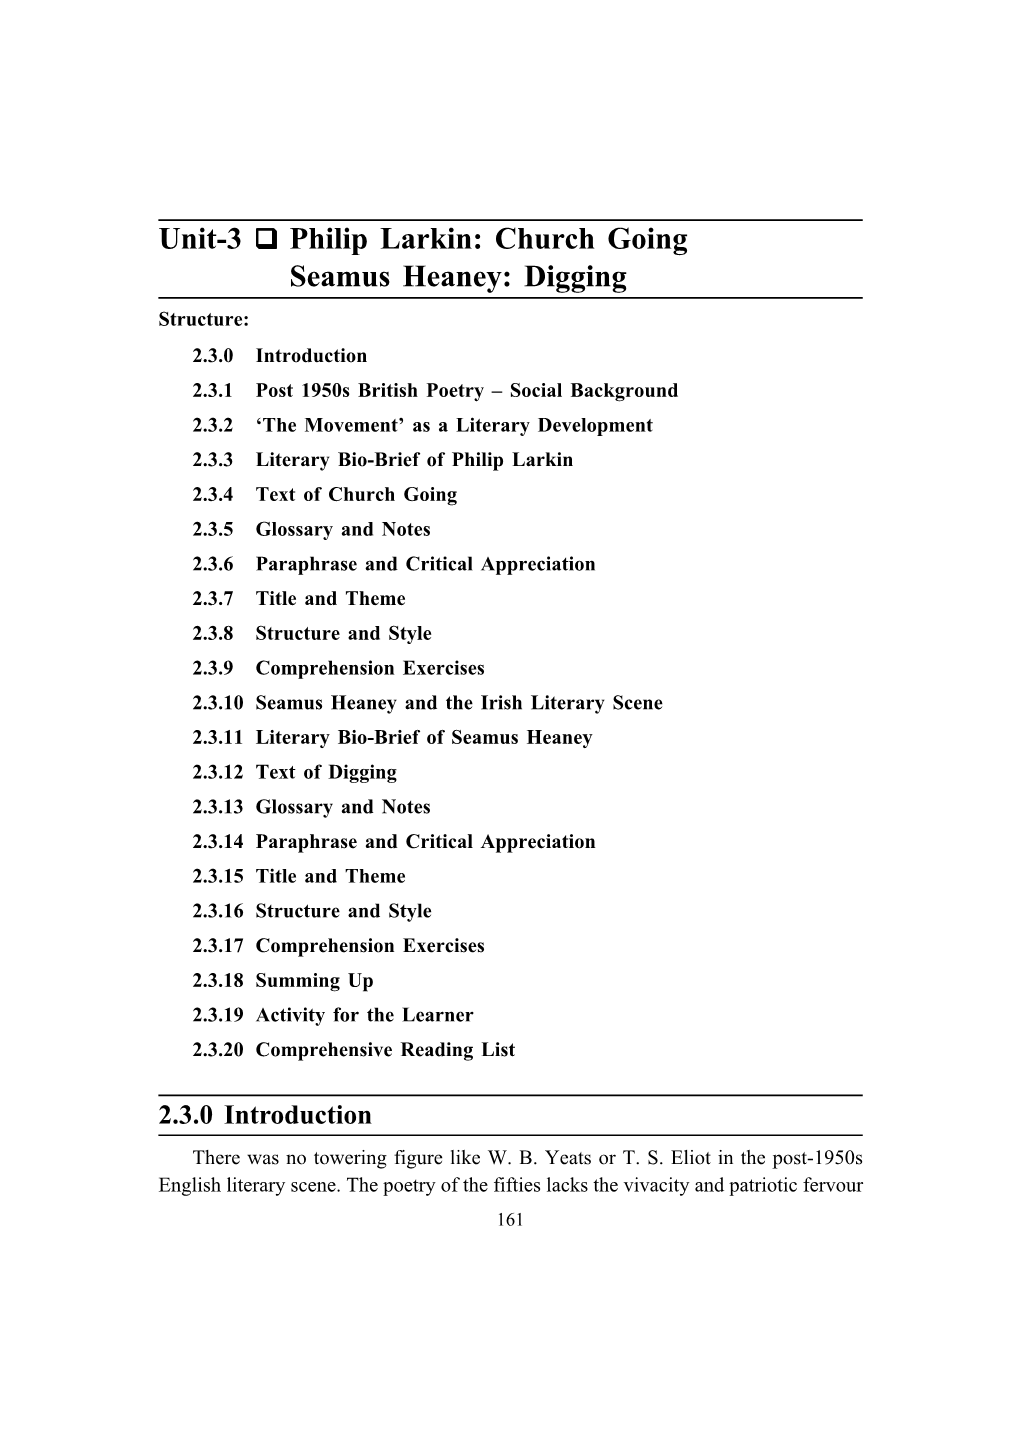 Unit-3 Philip Larkin: Church Going Seamus Heaney: Digging